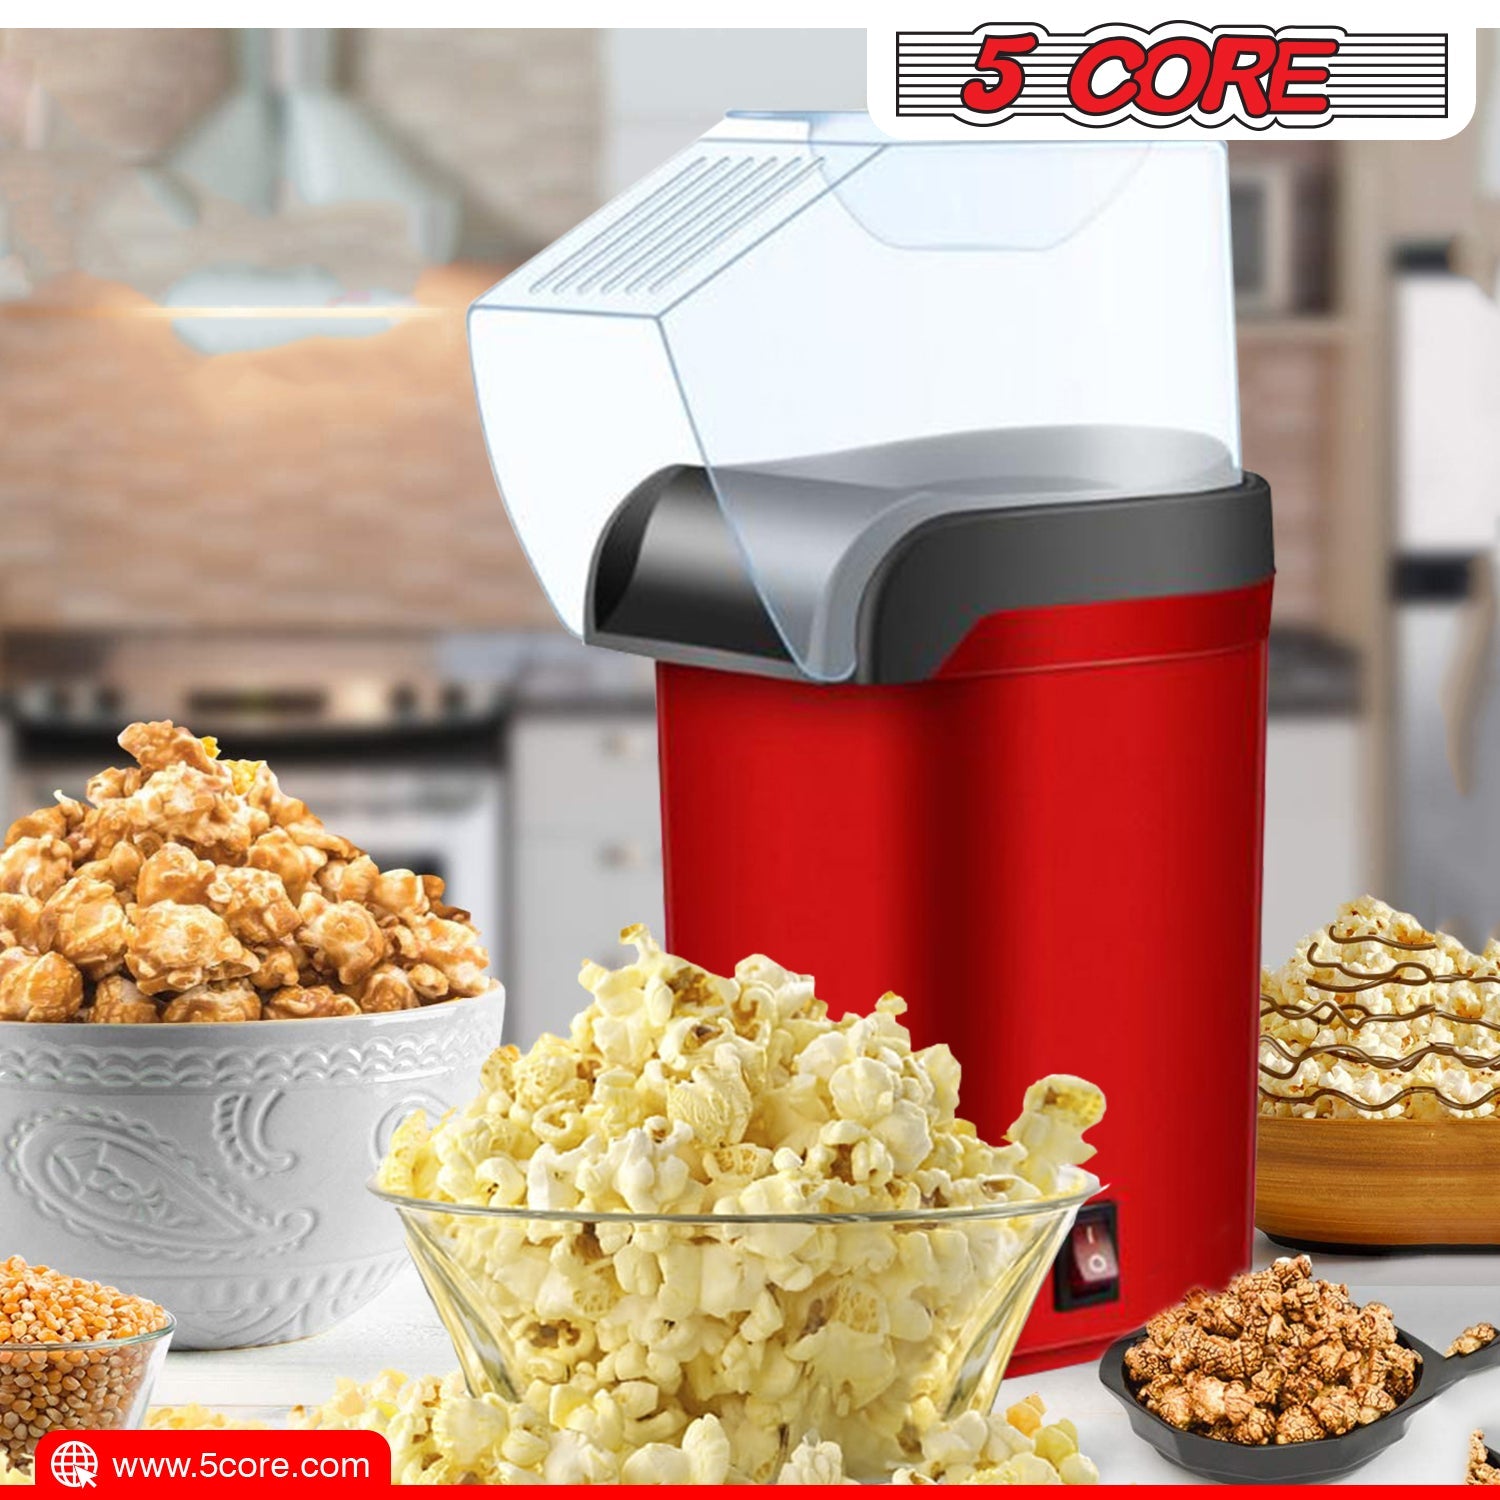 5L Popcorn Maker Machine, 800W Fast Quiet Popcorn Popper, Electric